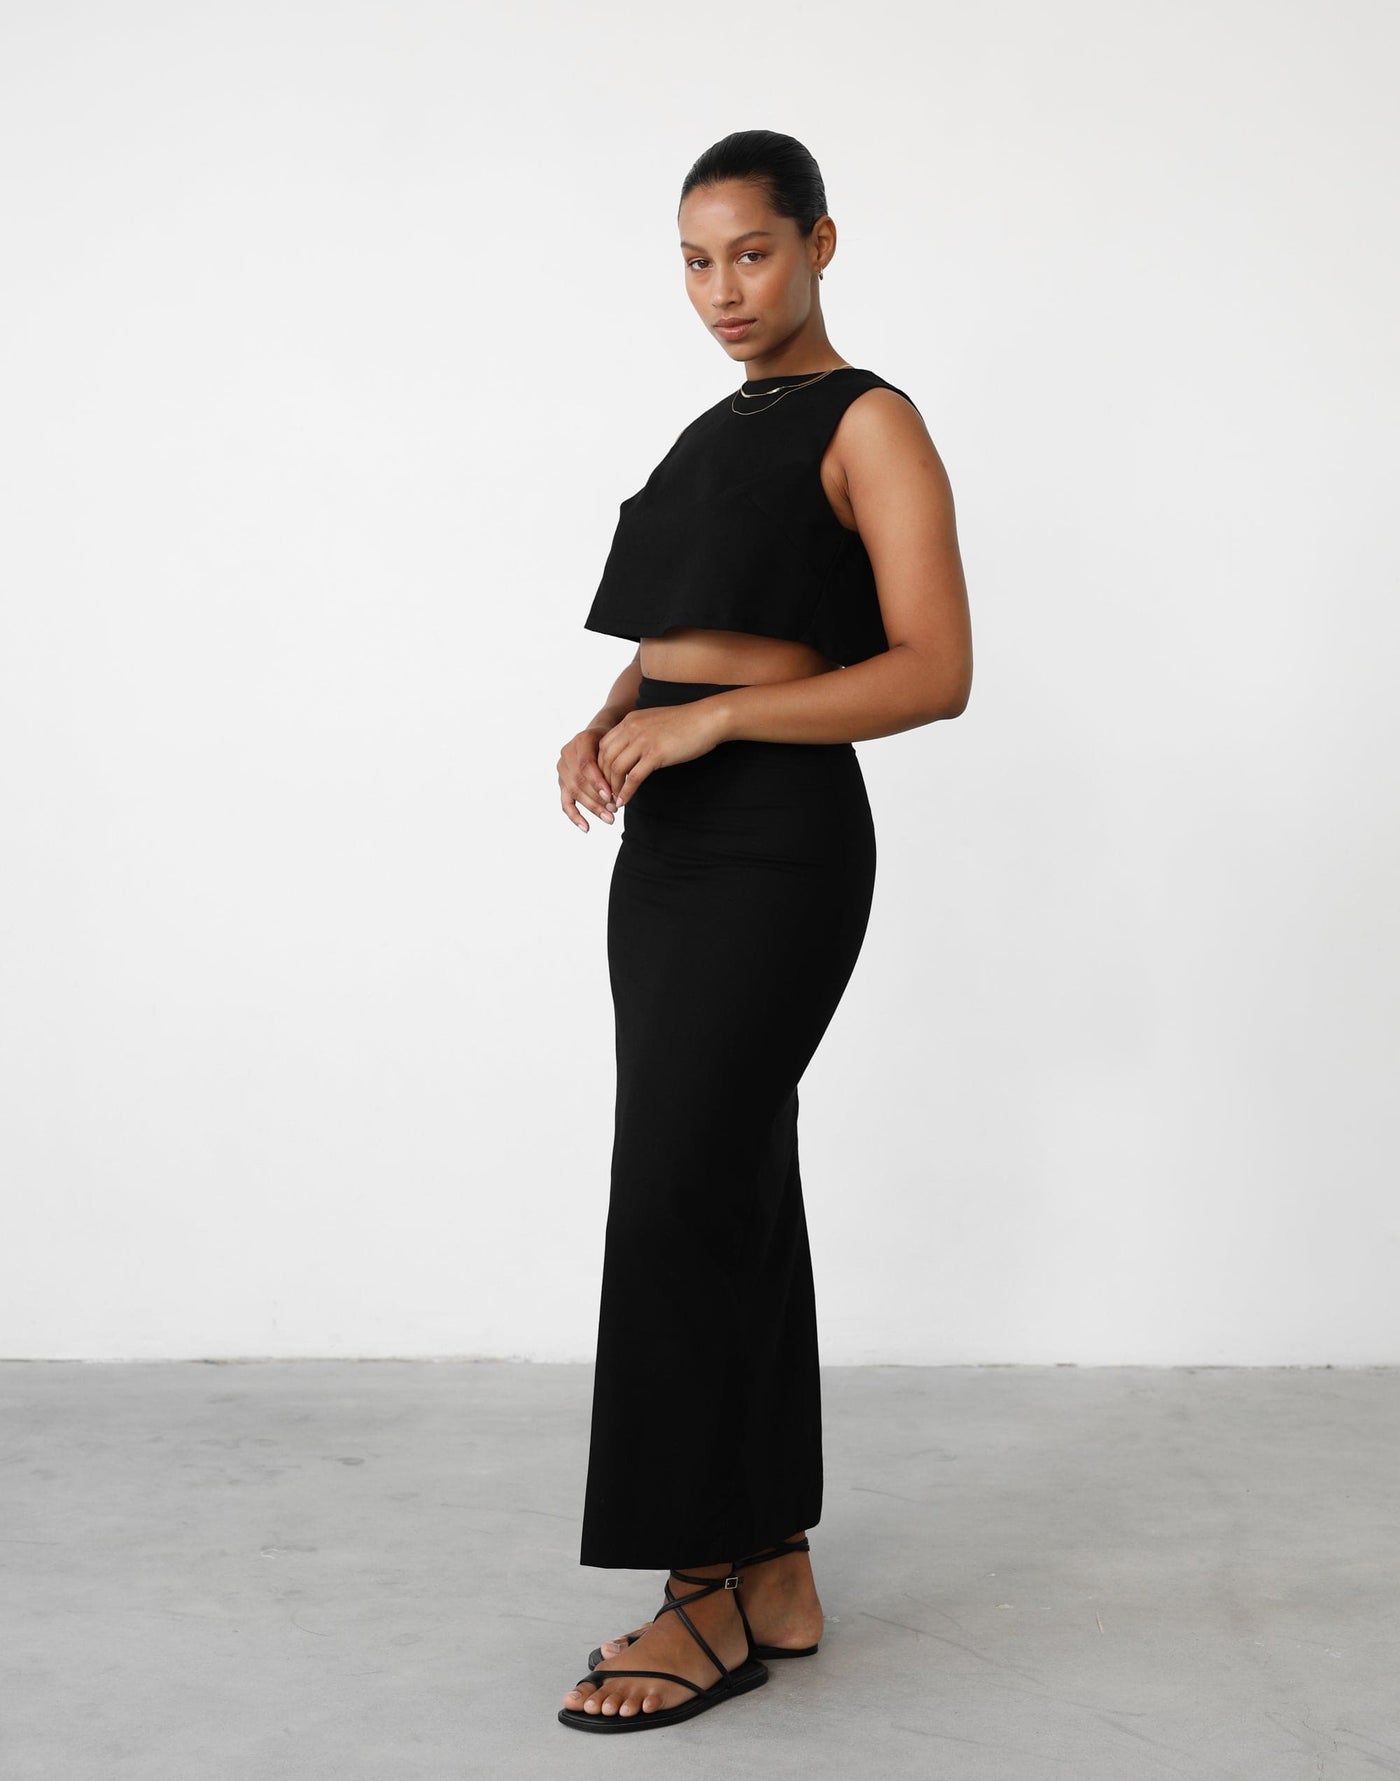 Sincerity Linen Top (Black) - Open Back Top - Women's Top - Charcoal Clothing